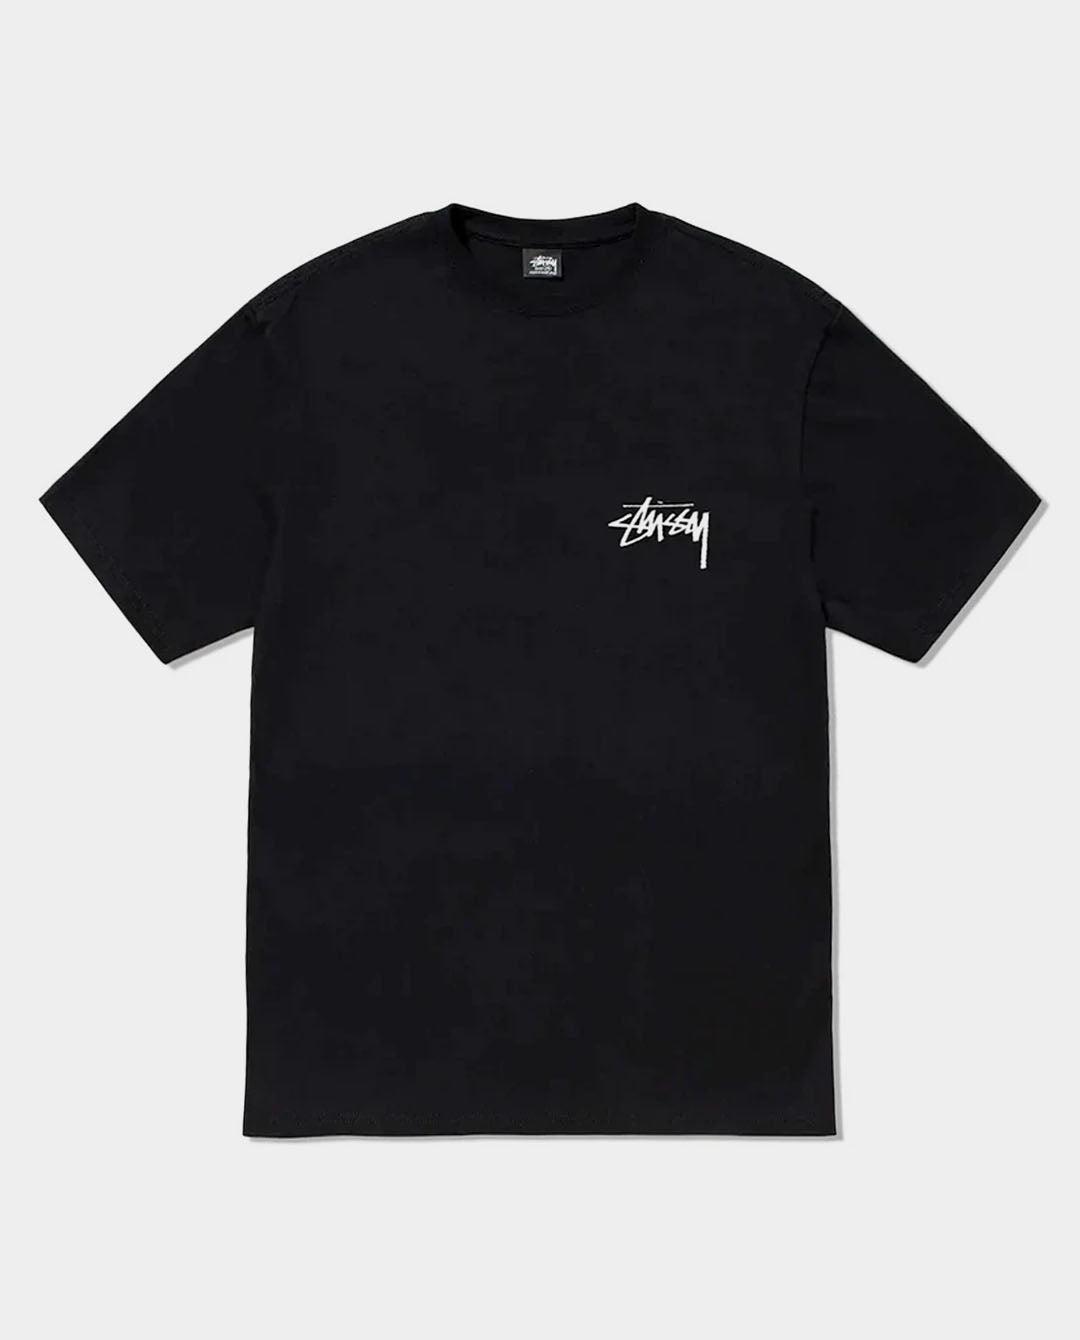 Stussy - Gold Lion T-Shirt - Black T-Shirts Stussy   